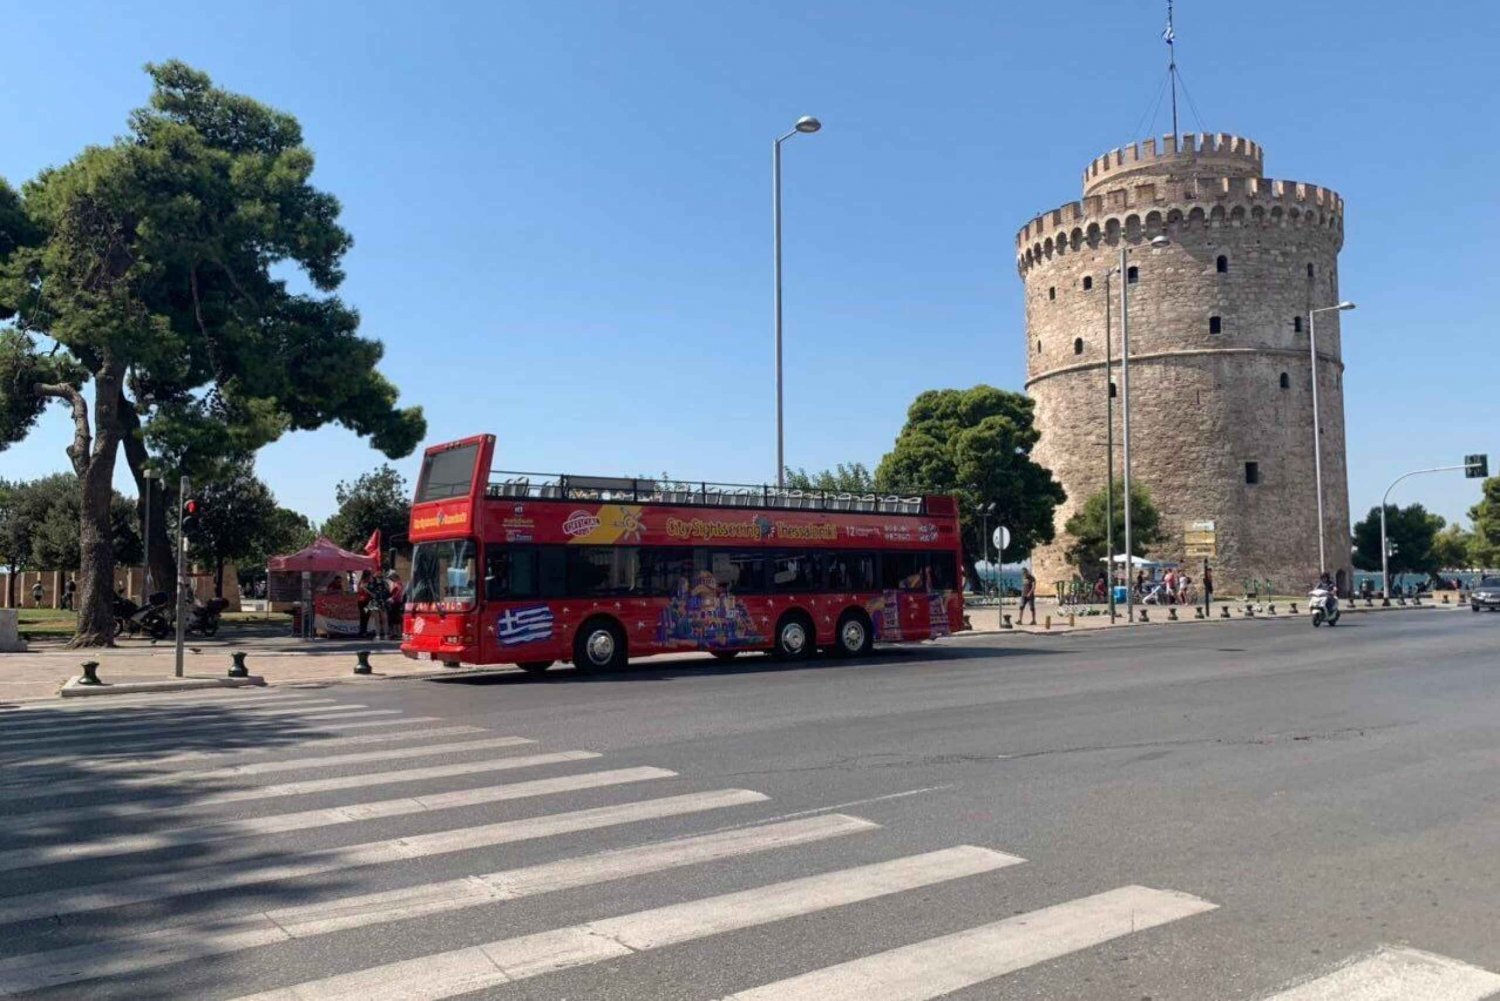 Salónica: Visita guiada en autobús Hop-On Hop-Off